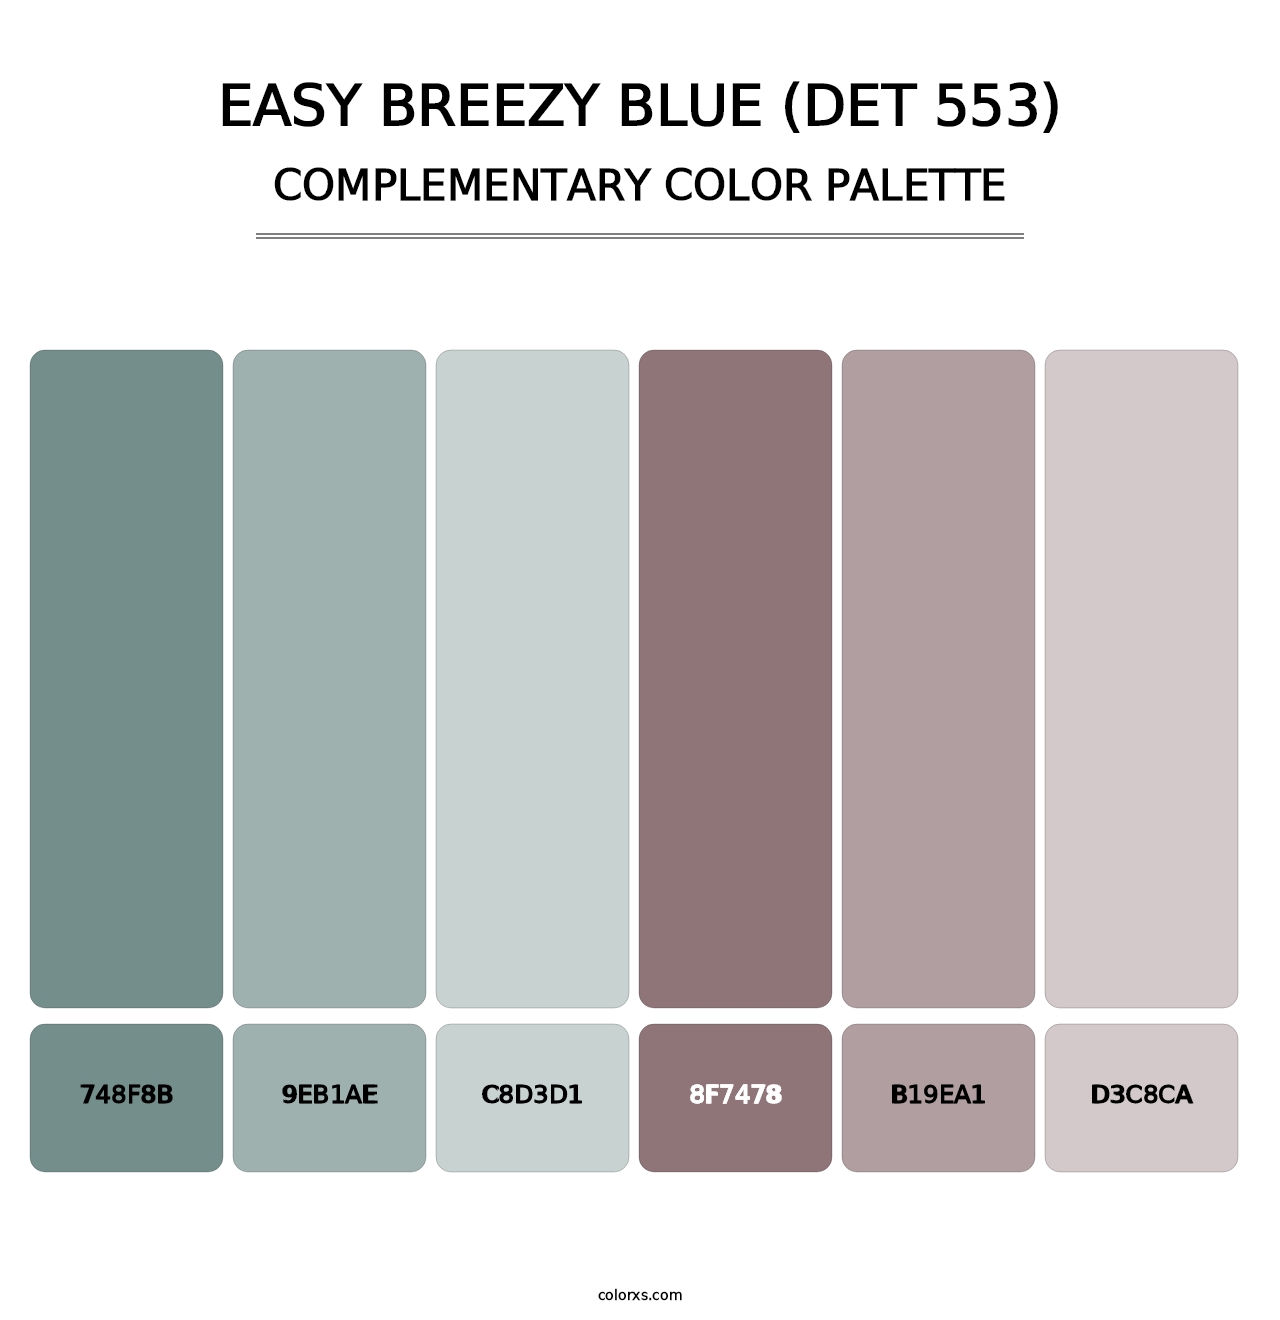 Easy Breezy Blue (DET 553) - Complementary Color Palette